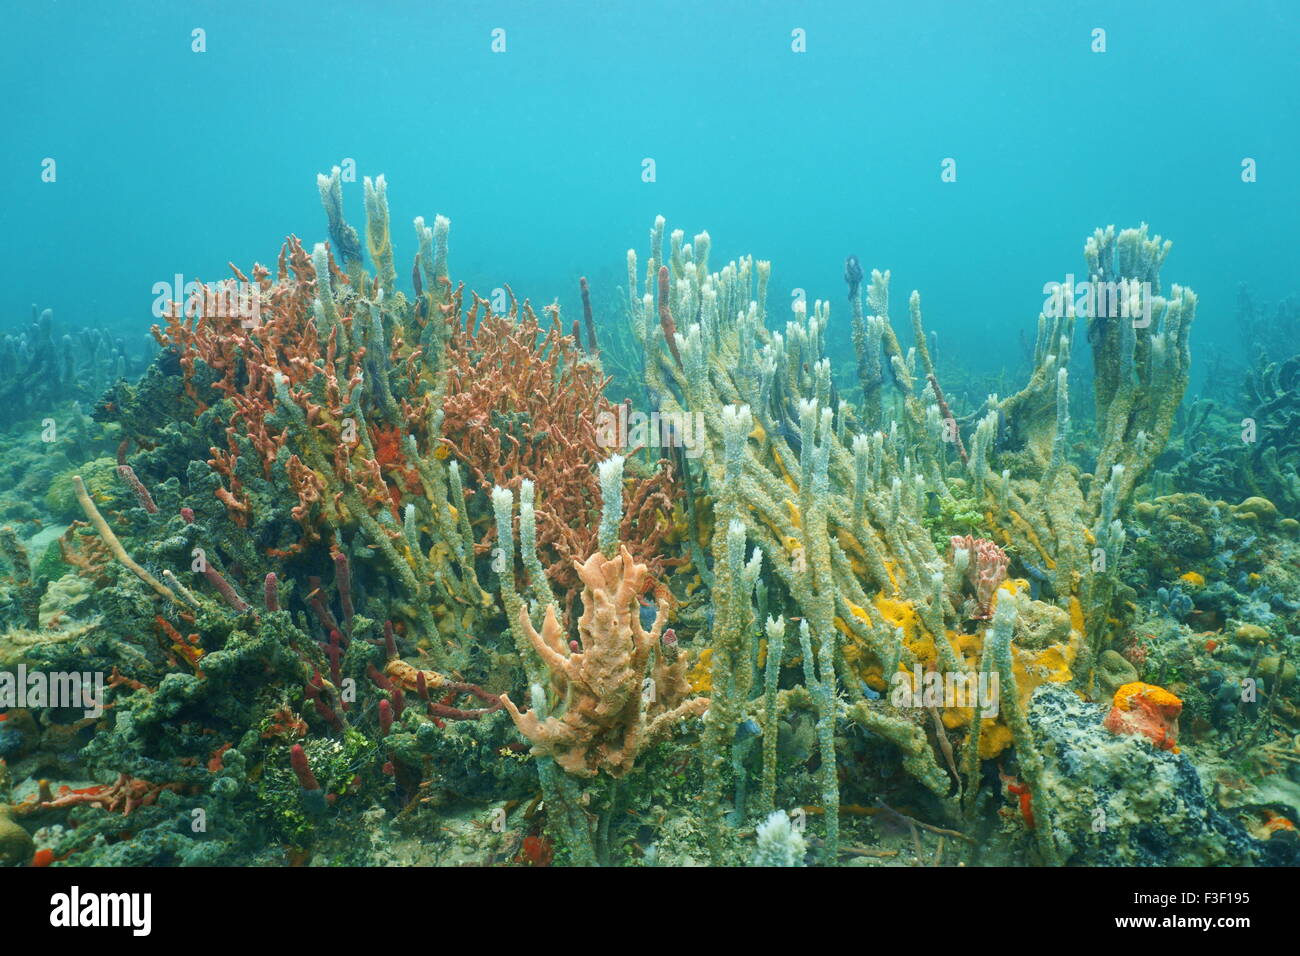 Underwater marine life, diversity of sea sponges on the ocean floor Stock Photo